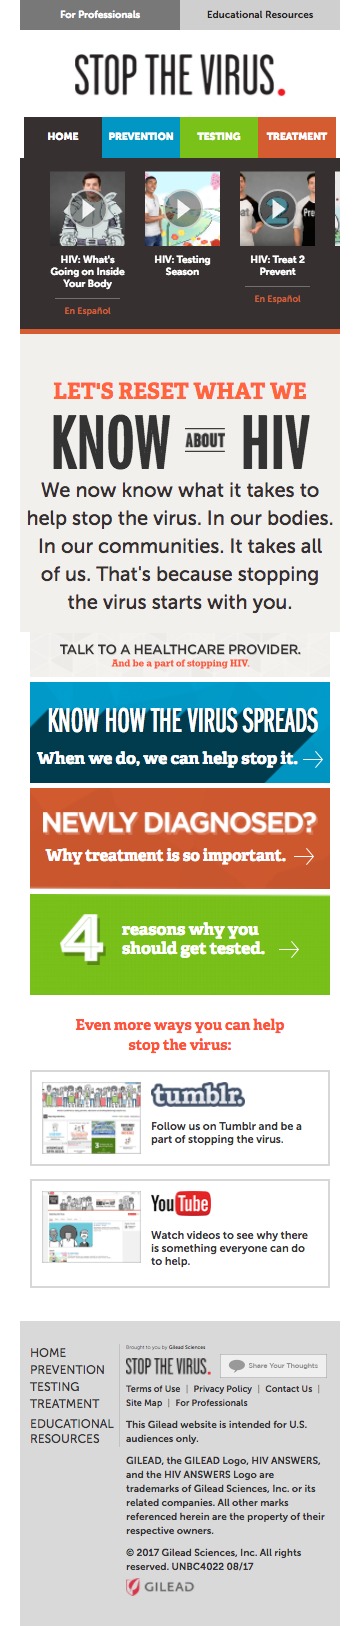 Stop The Virus - Disease Awareness Website from Gilead - Homepage on Mobile